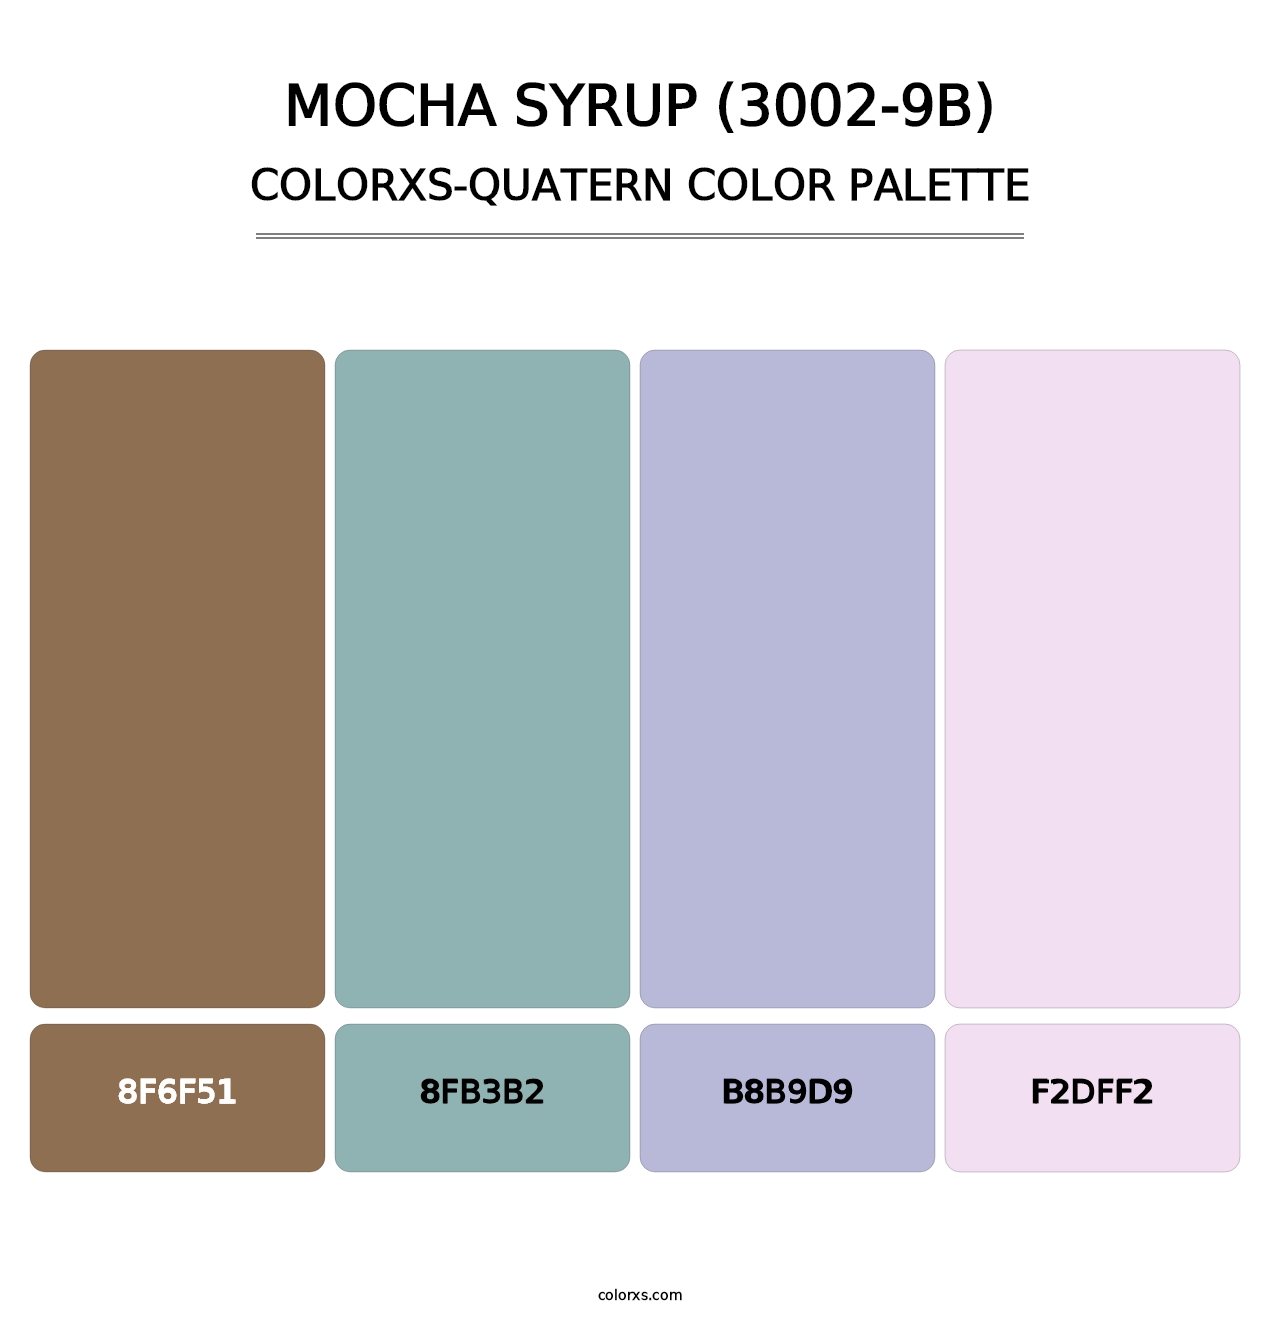 Mocha Syrup (3002-9B) - Colorxs Quatern Palette